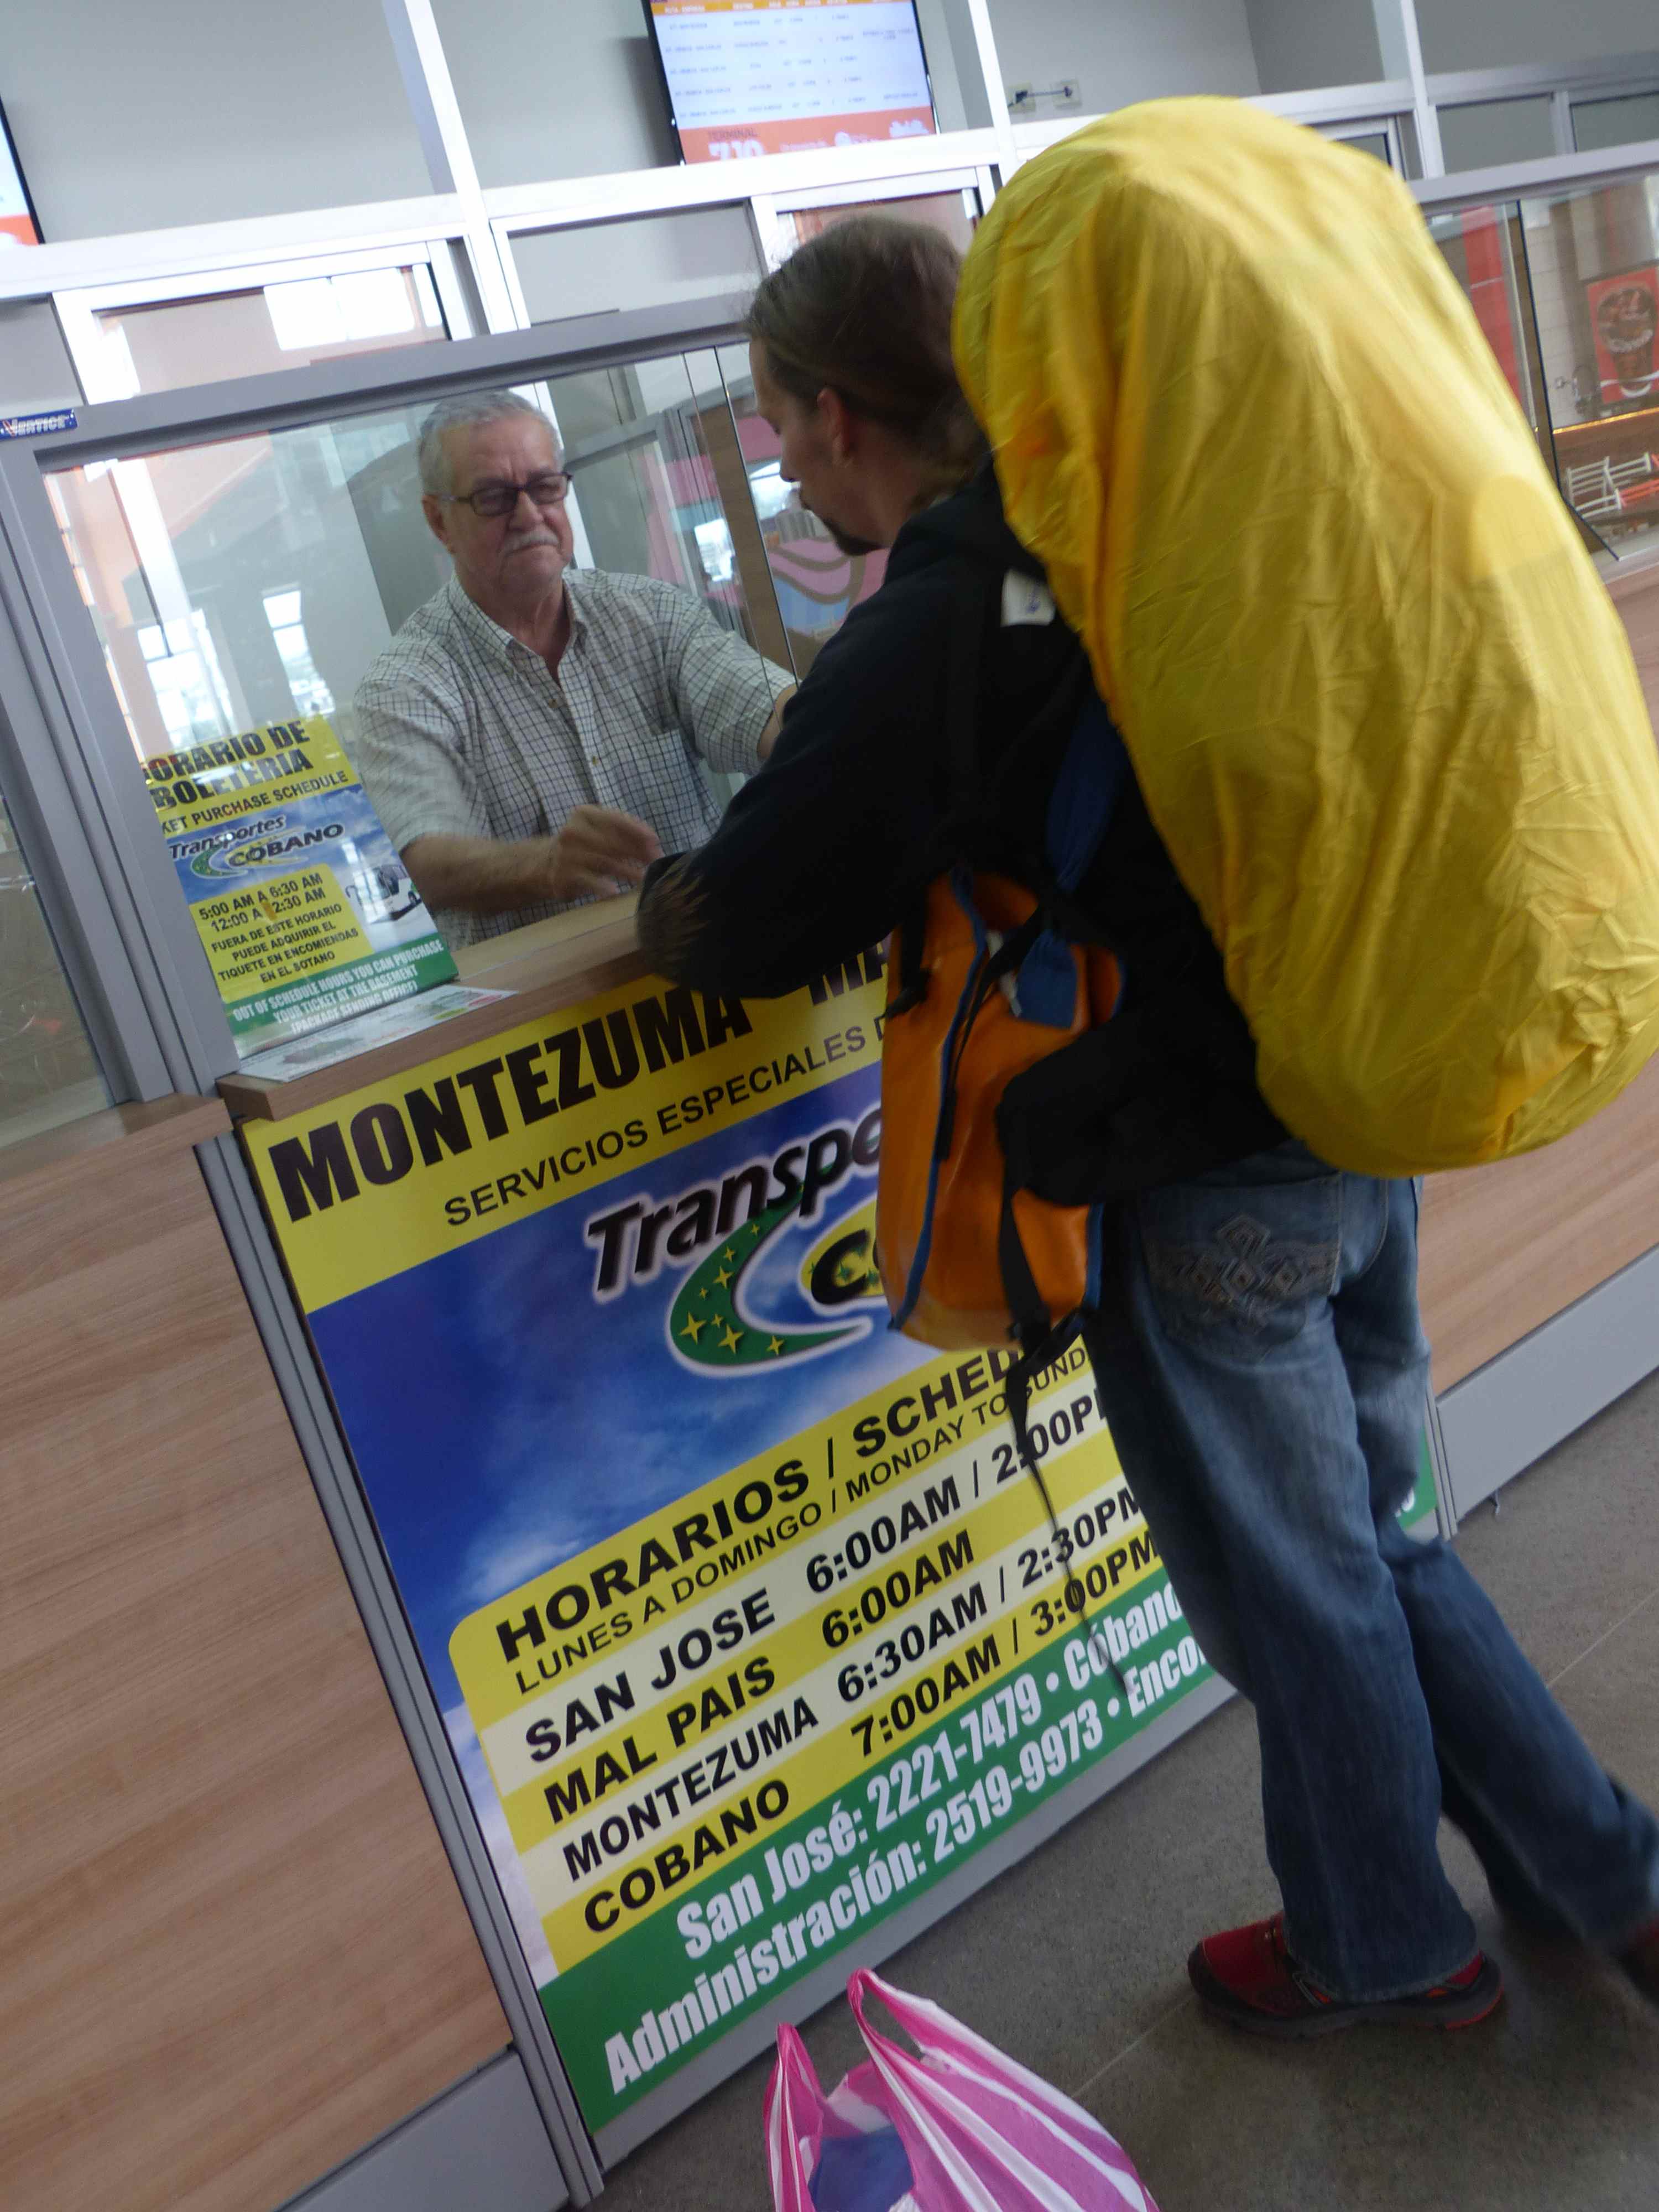 Buy your direct bus ticket to Montezuma!